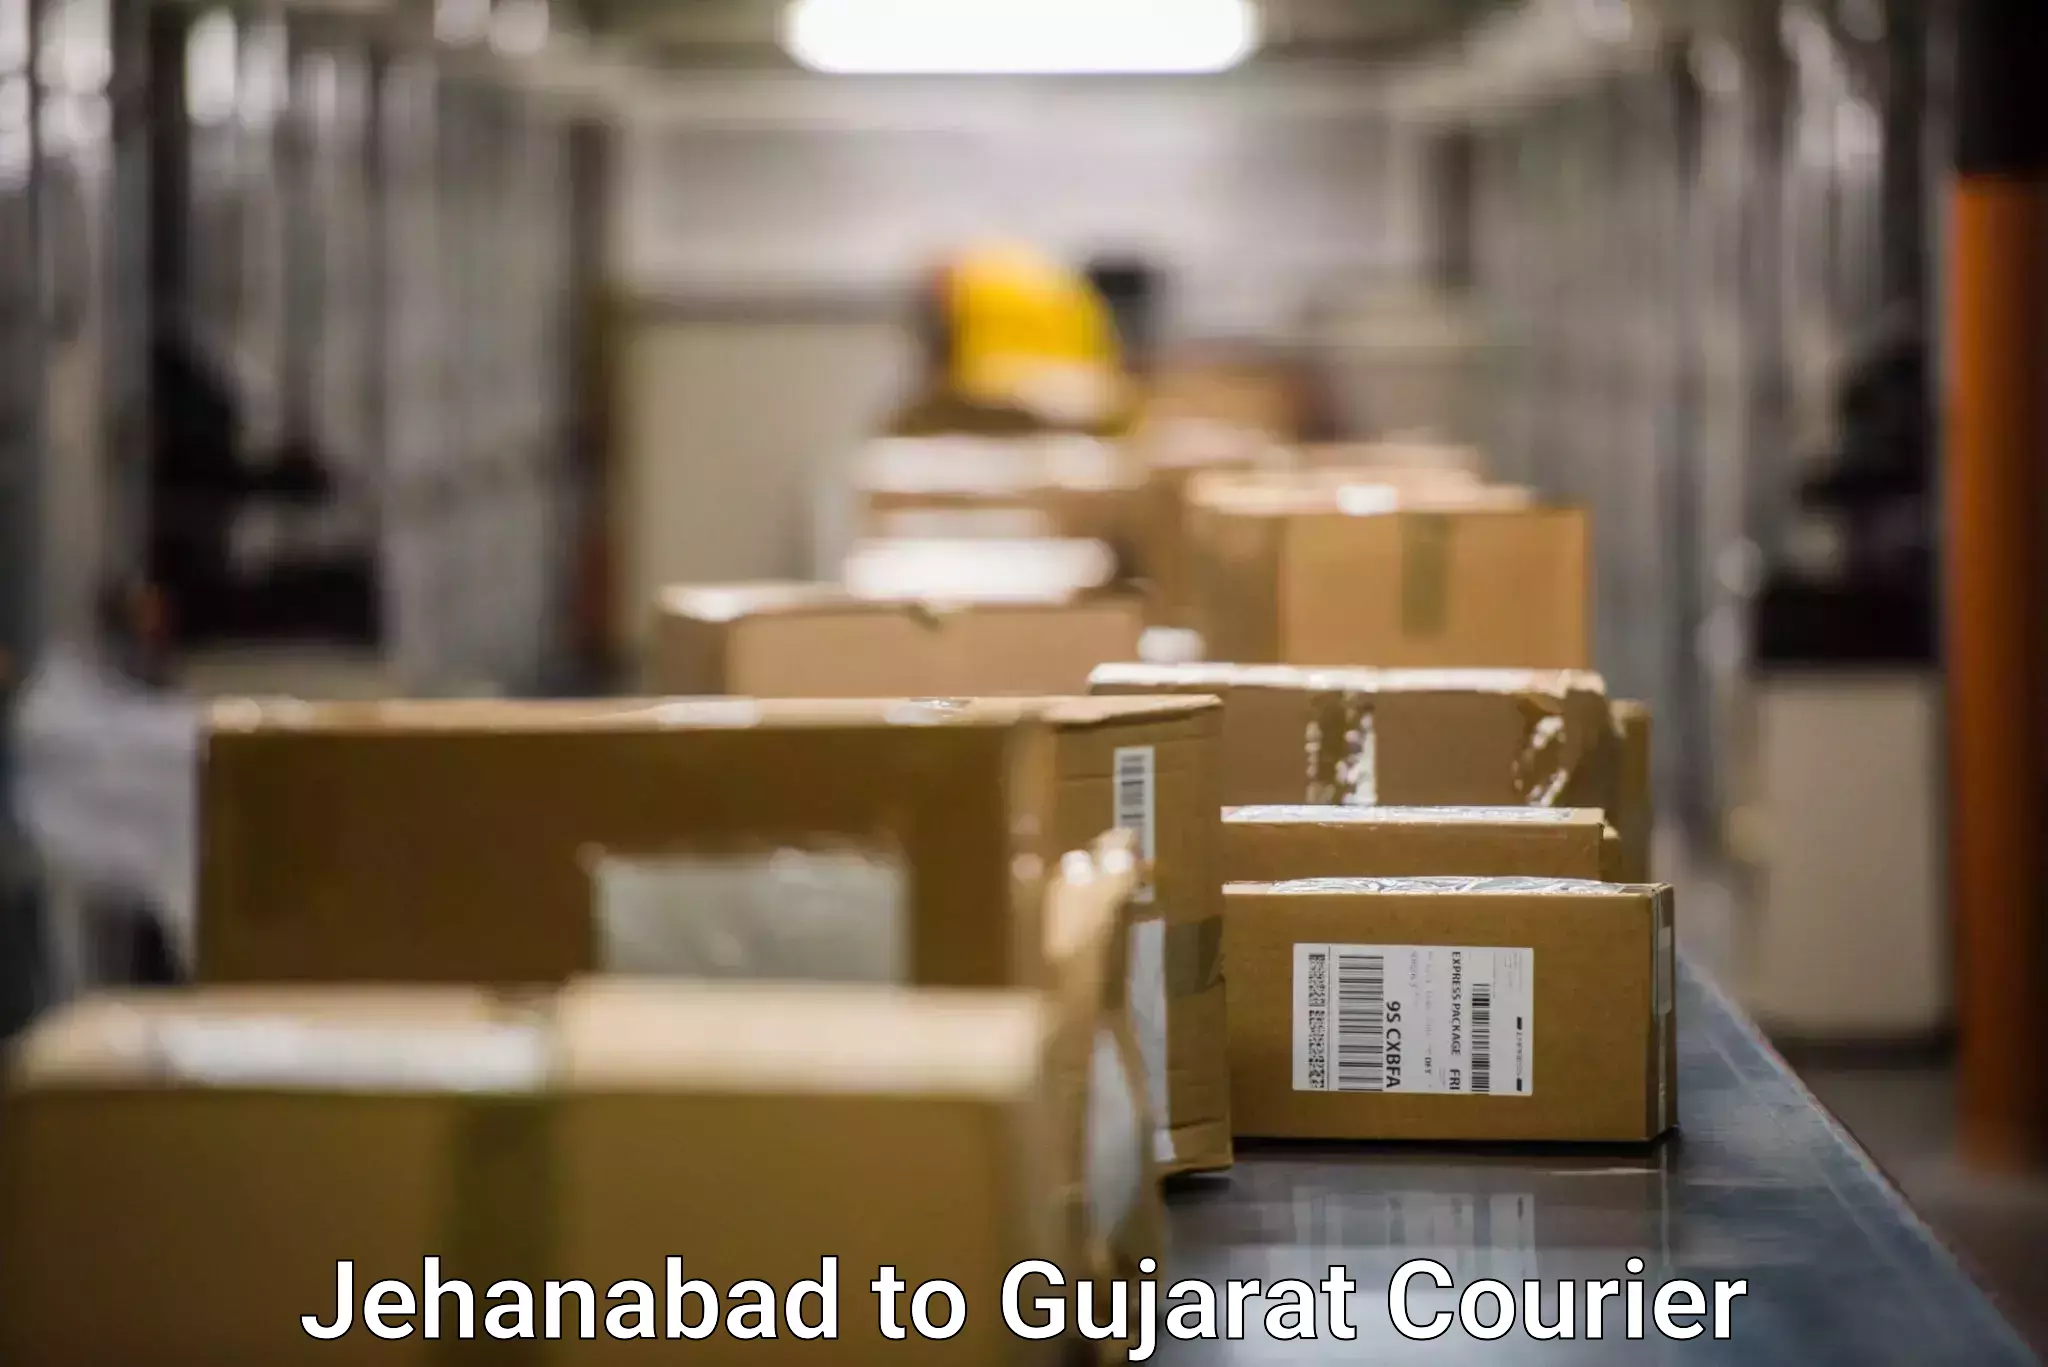 Ground shipping Jehanabad to Ahmedabad